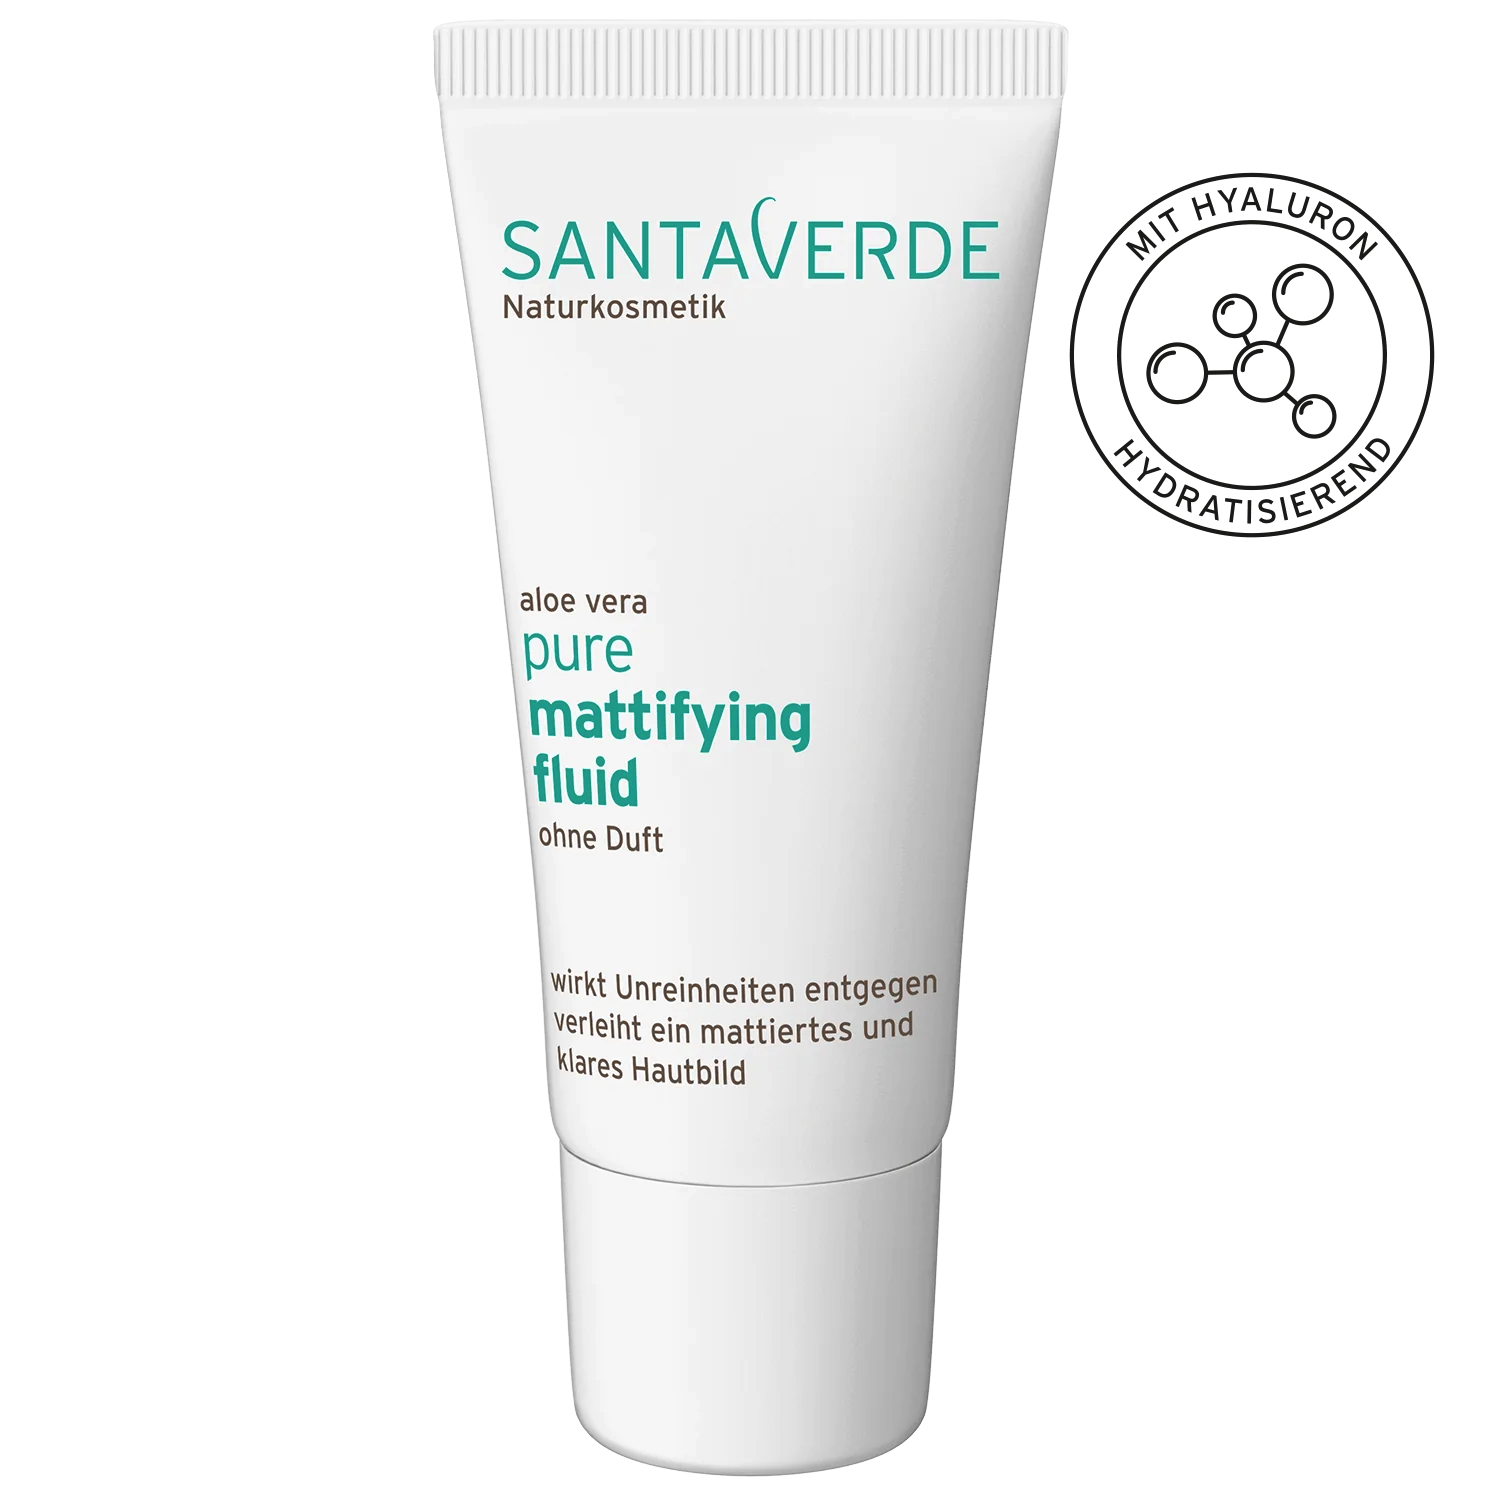 Santaverde pure mattifying fluid | 30ml | Aloe Vera & ohne Duft